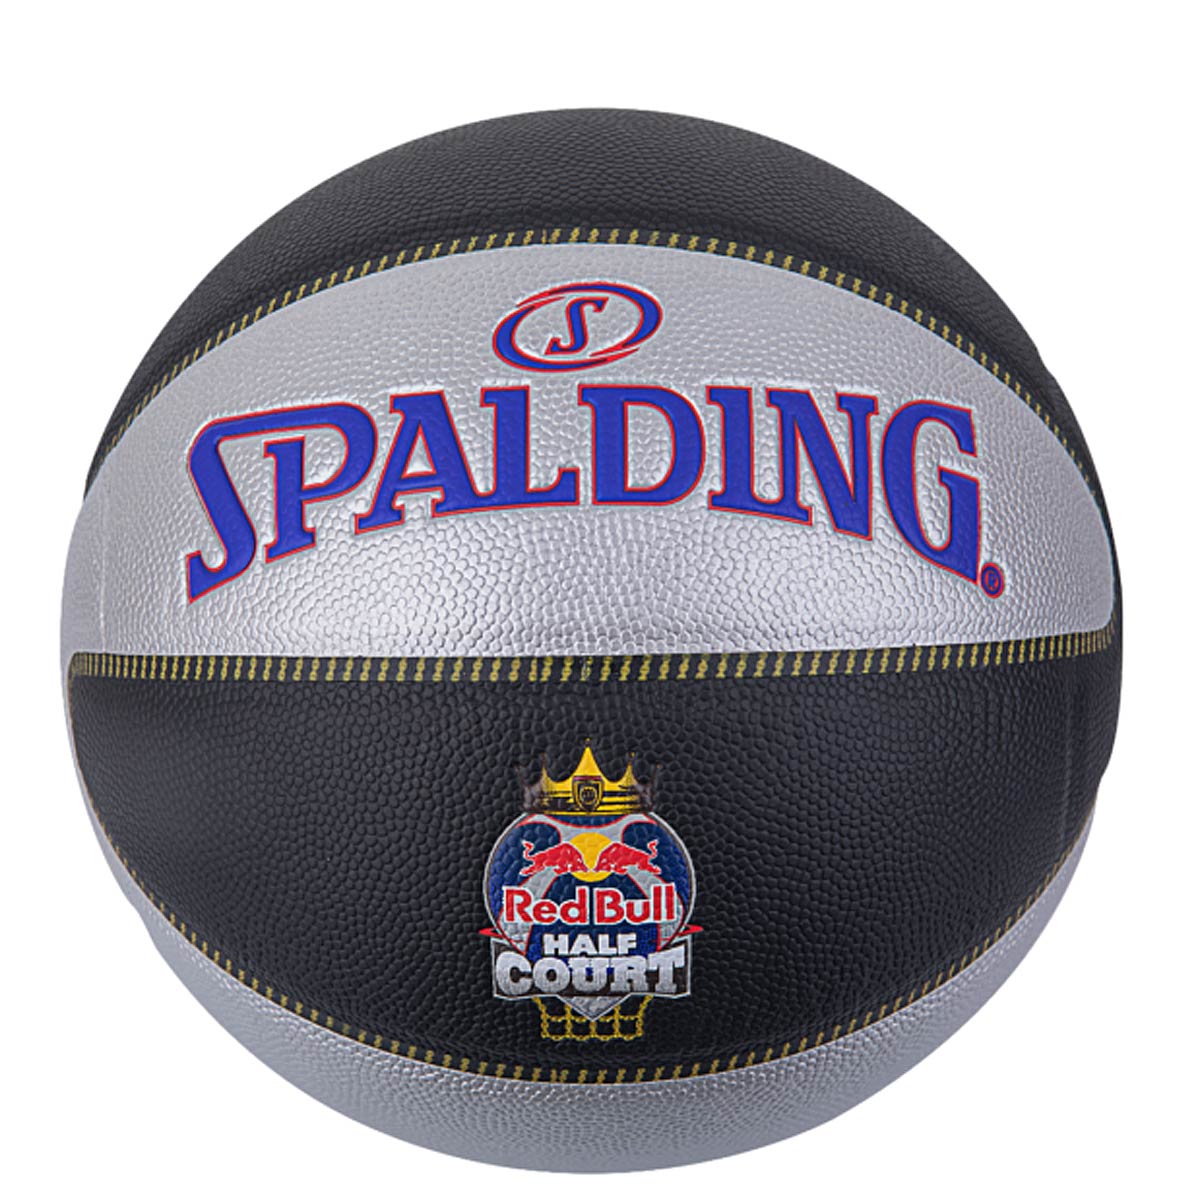 Spalding Tf-33 Redbull Half Court Sz6 Composite Basketball, Orange